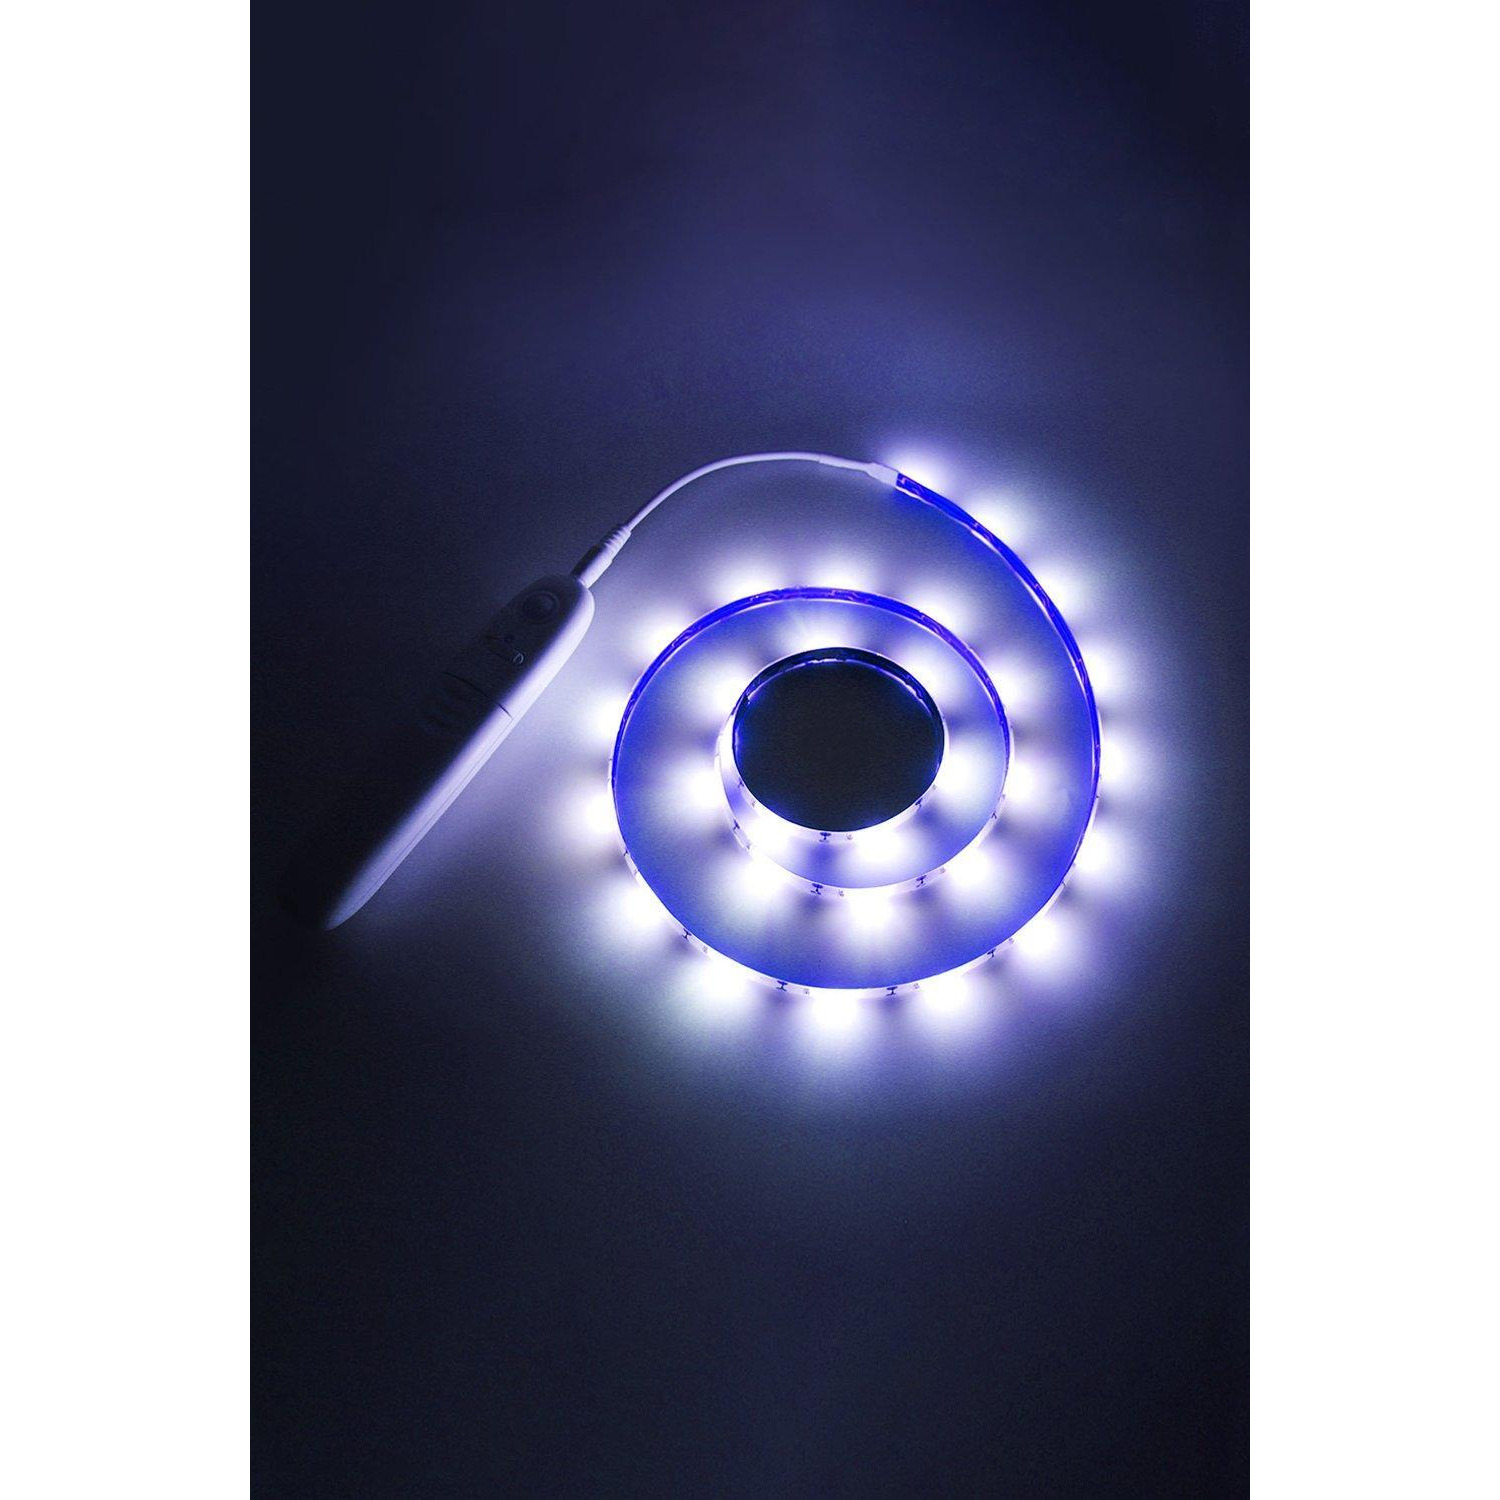 2.4W LED Infrared Sensing Strip Light, 1M, Blue Light, Power by 4xAAA Battery - image 1